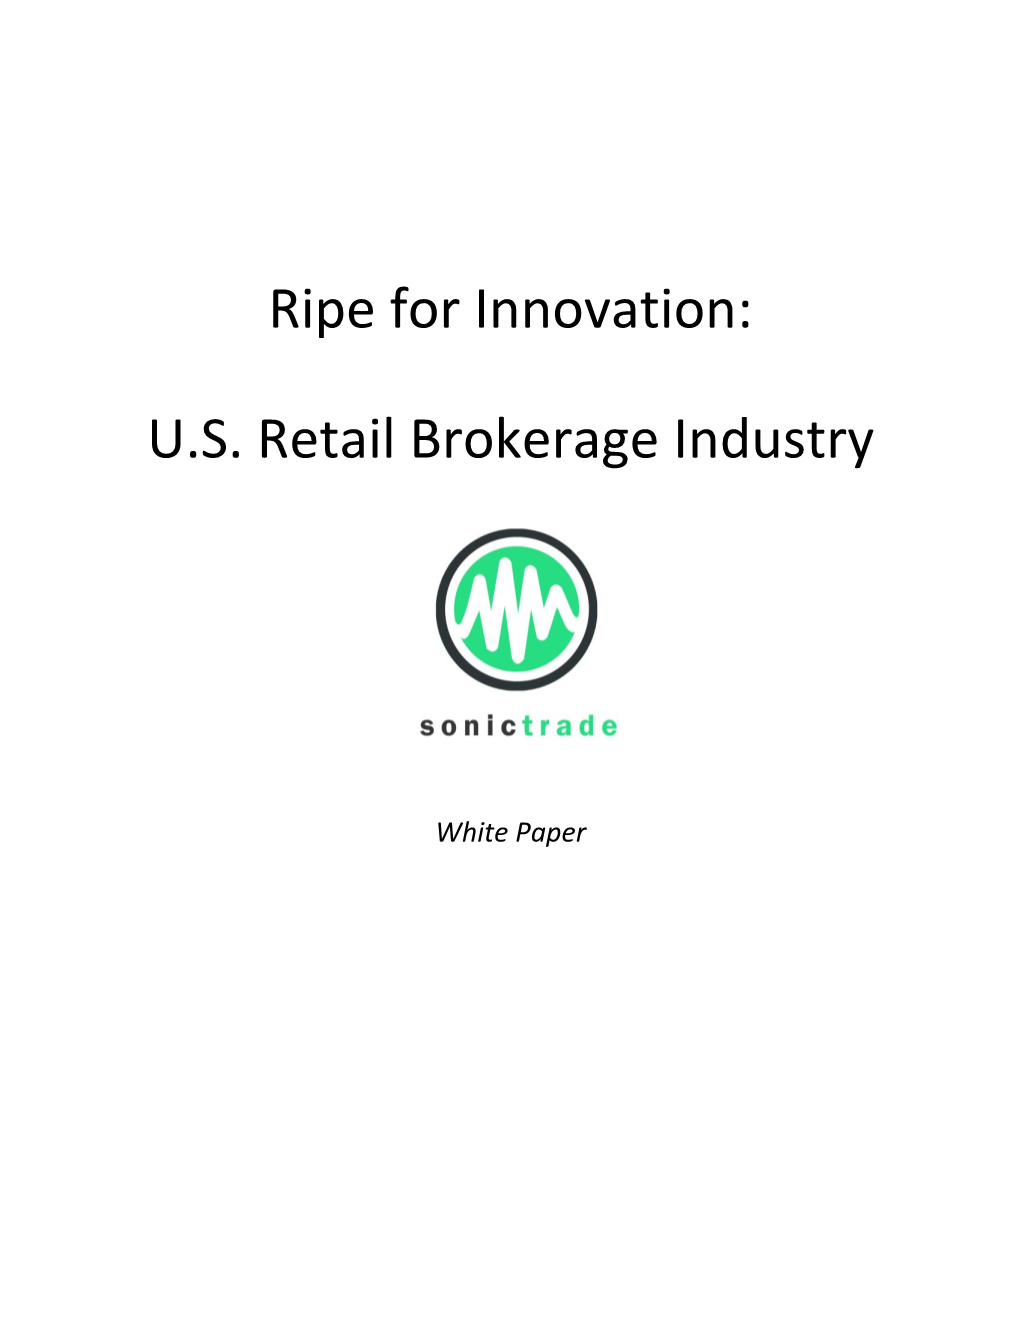 Ripe for Innovation: U.S. Retail Brokerage Industry